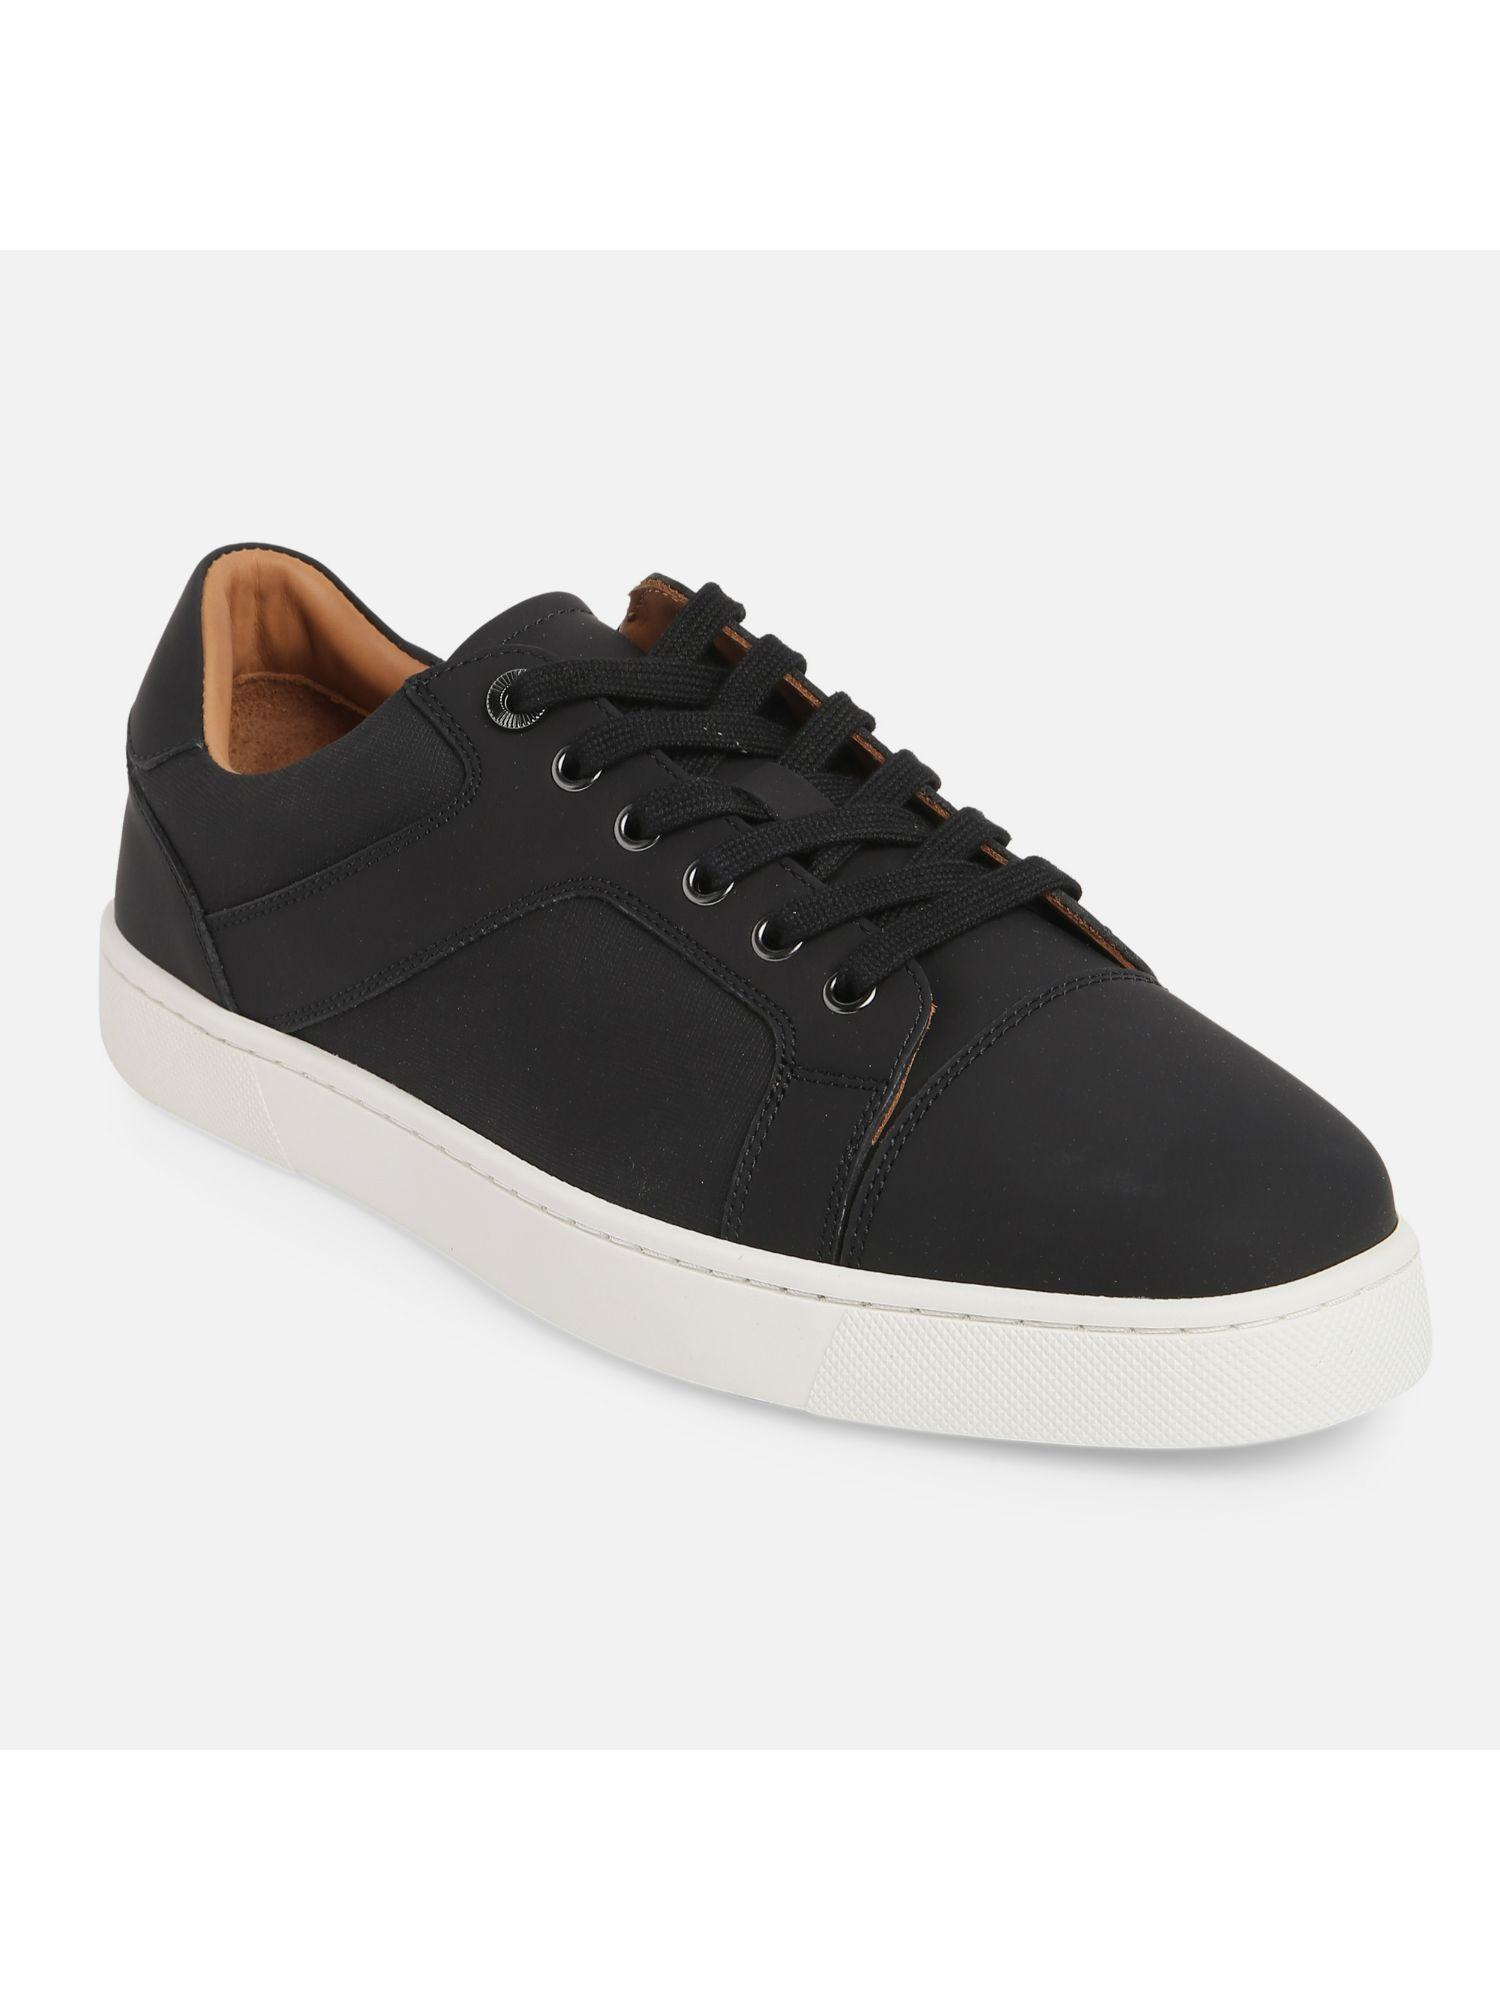 crossfield-leather-black-solid-sneakers